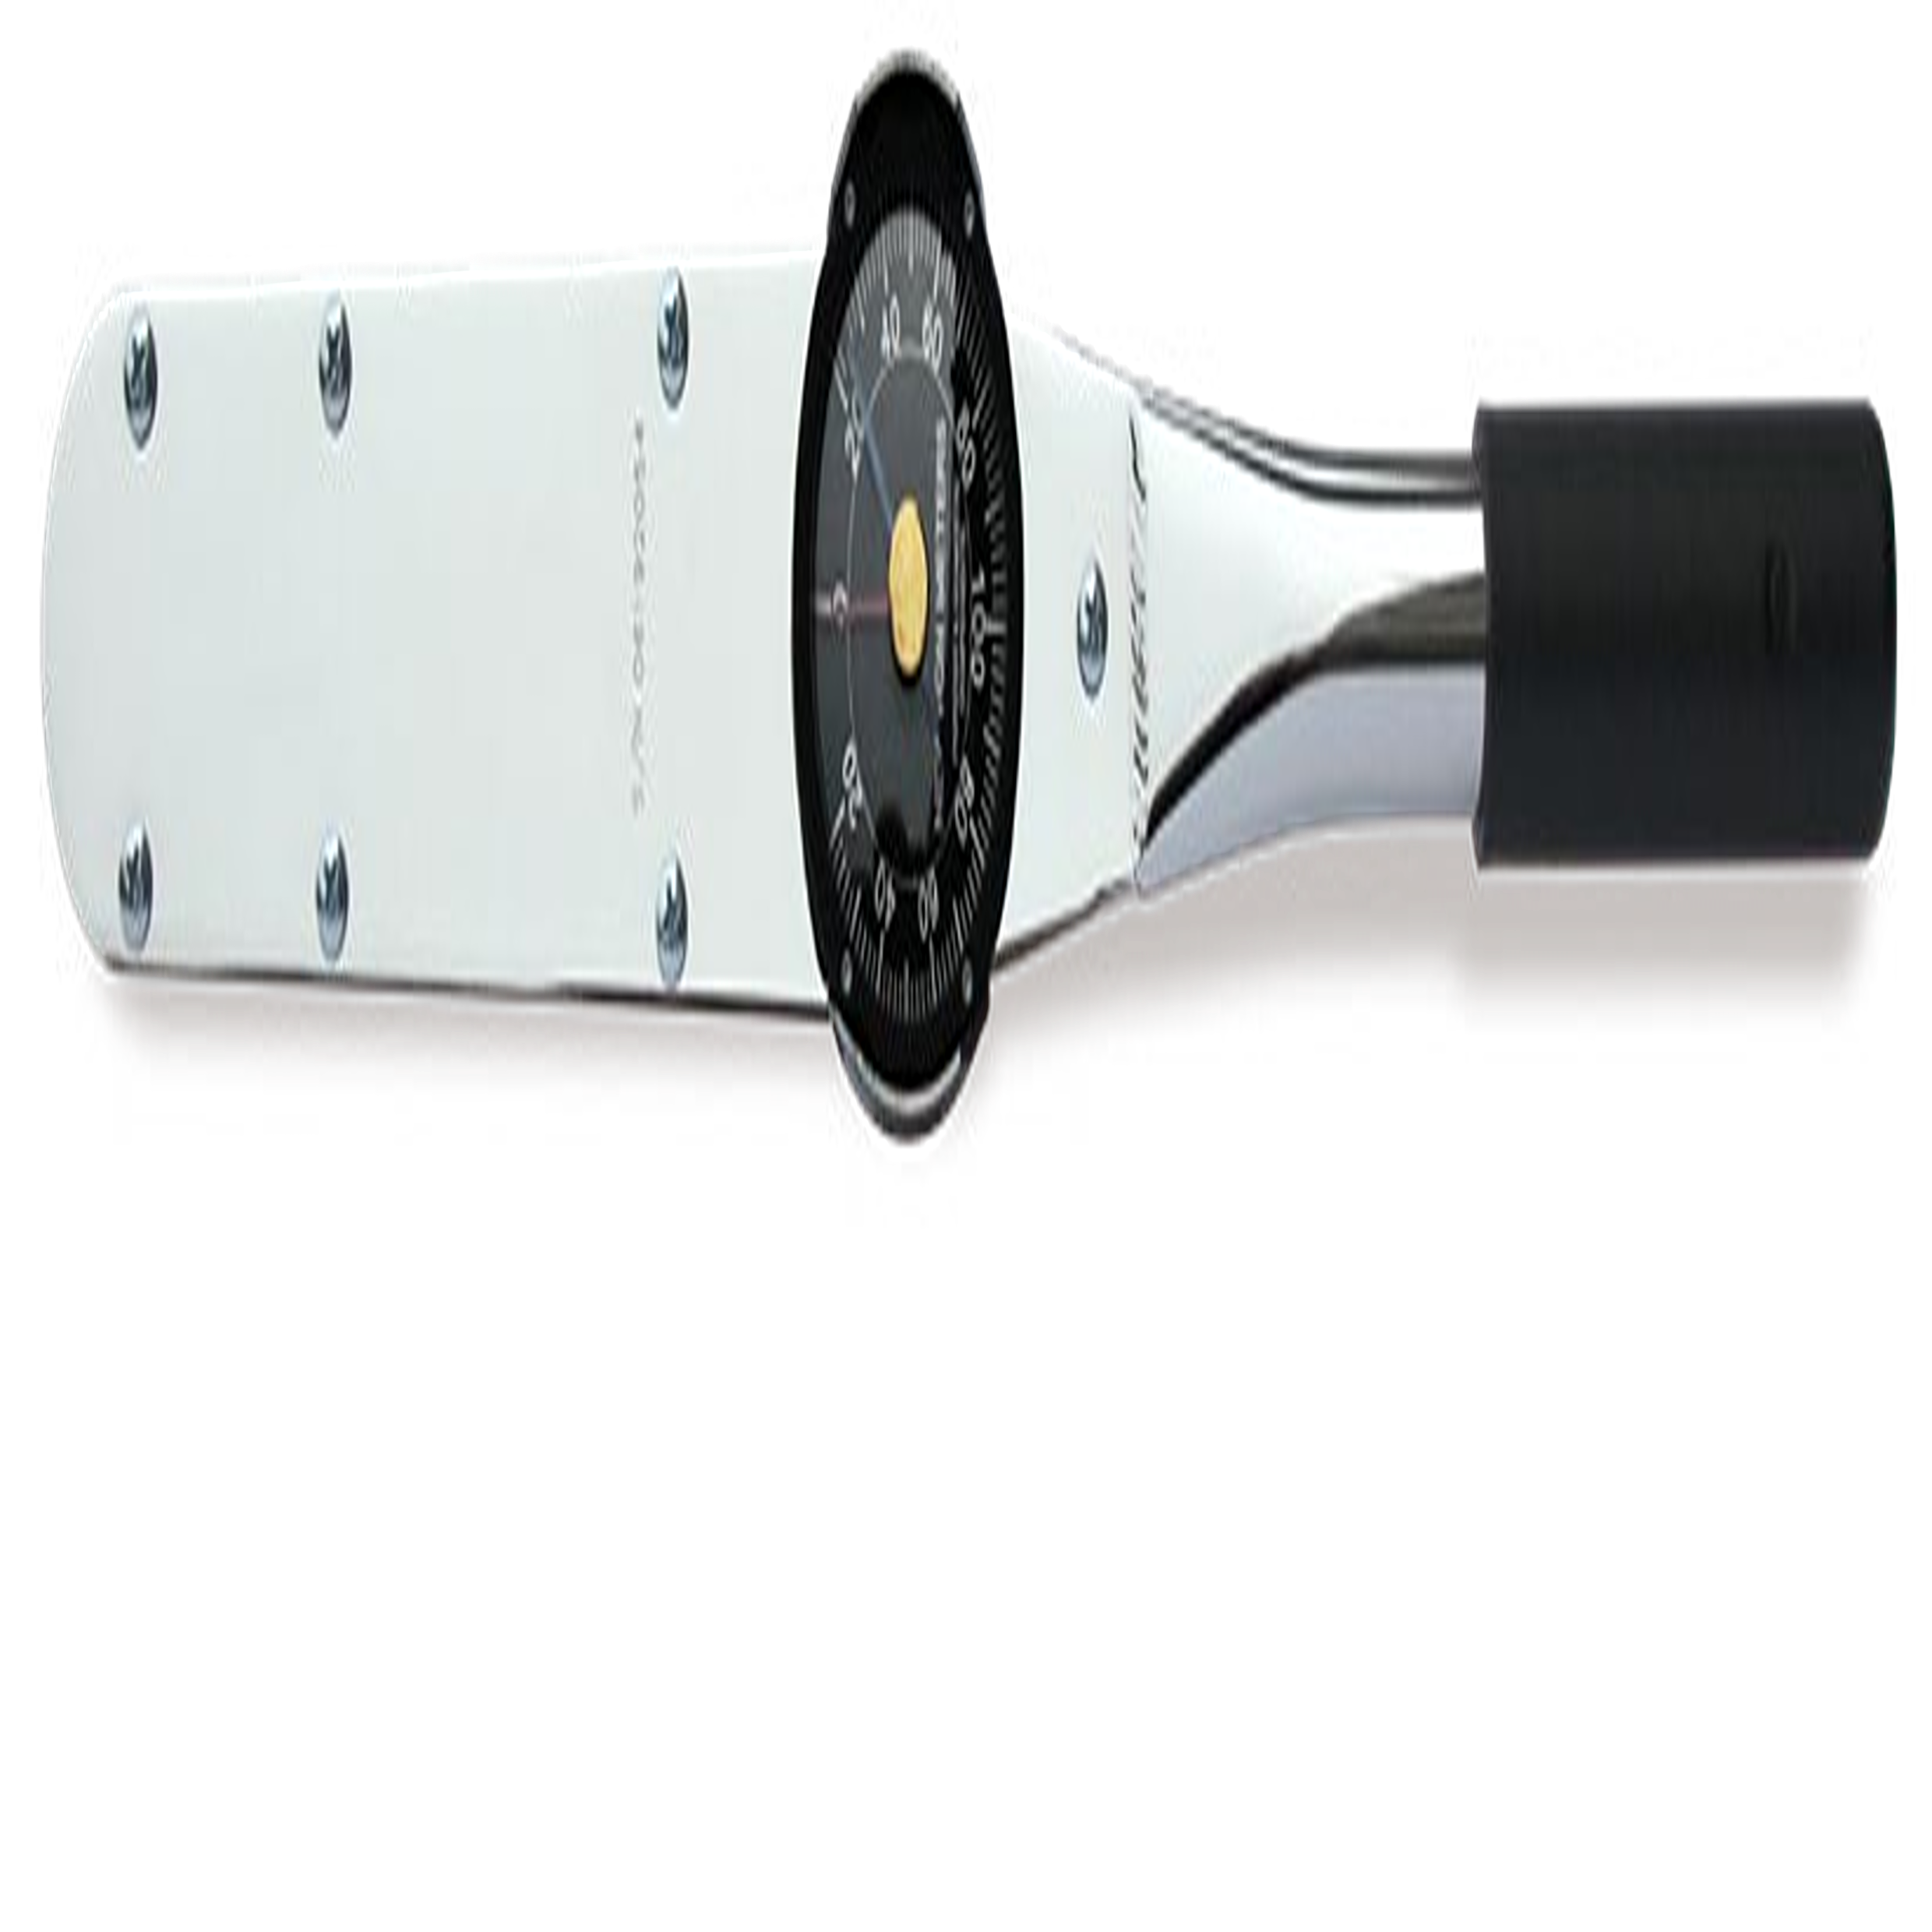 TECNOGI 2100 Dial Torque Wrench 20 - 100 Nm (TECNOGI Tools) - Premium Dial Torque Wrench from TECNOGI - Shop now at Yew Aik.